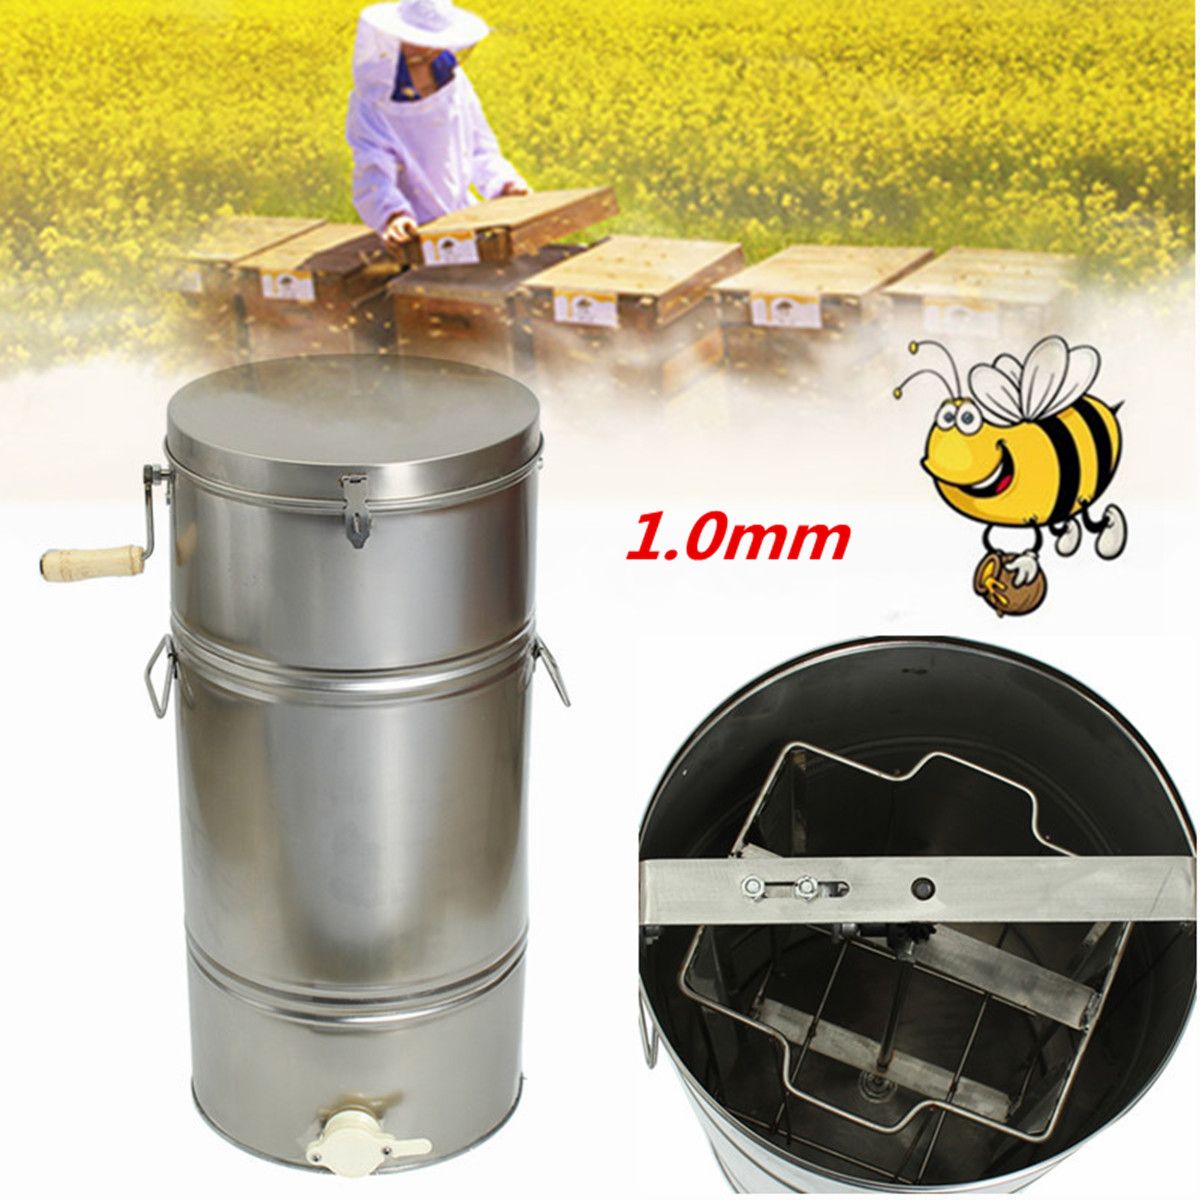 10mm-Stainless-Steel-Bee-Honey-Extractor-Beehive-Drum-Tank-Beekeeping-Equipment-Two-Frame-1375336